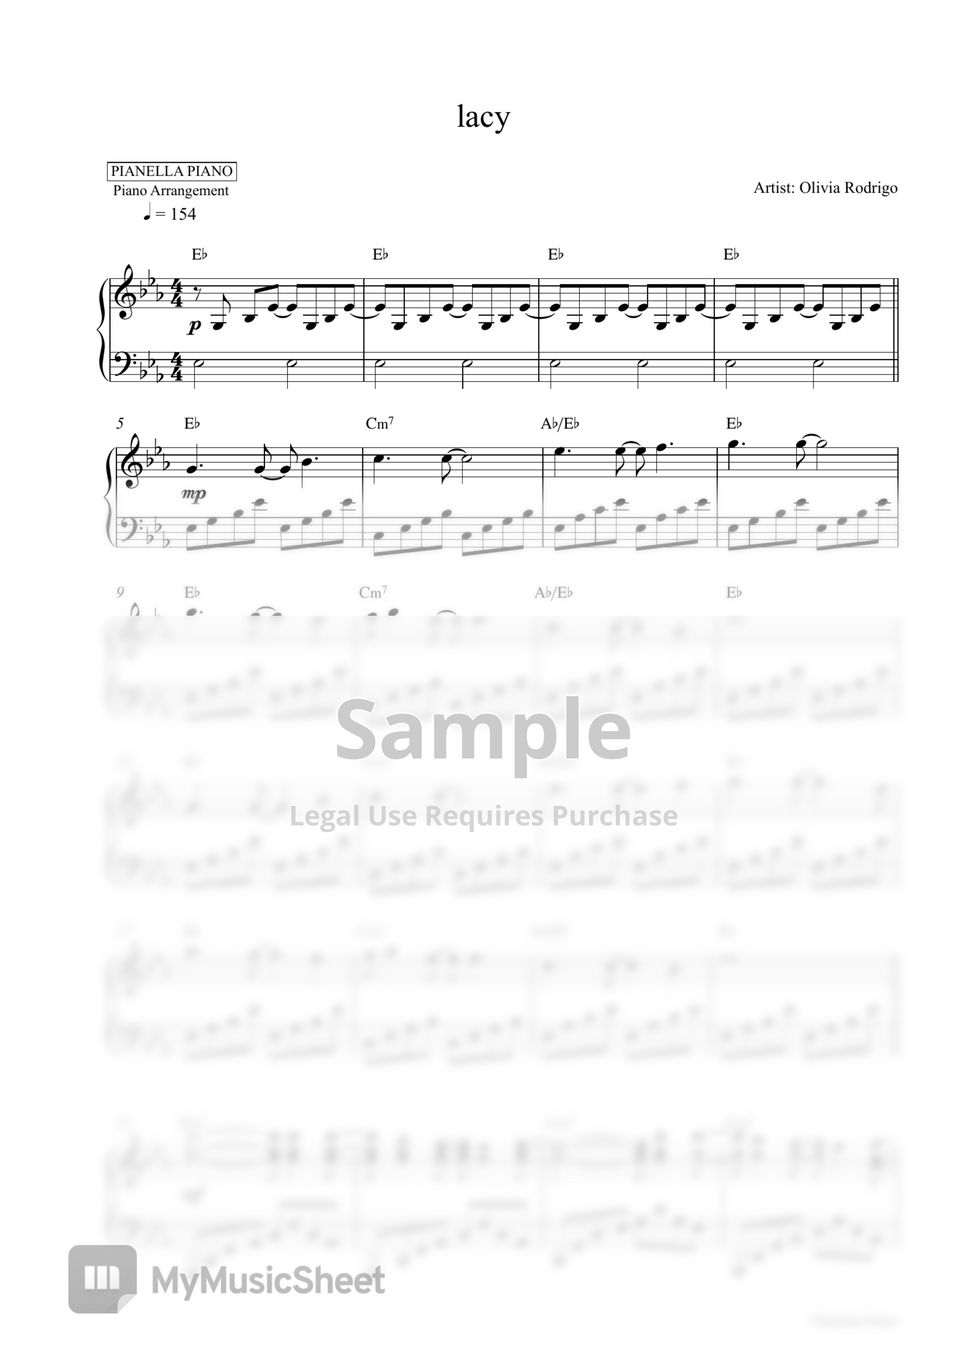 OIivia Rodrigo - lacy (Piano Sheet) by Pianella Piano